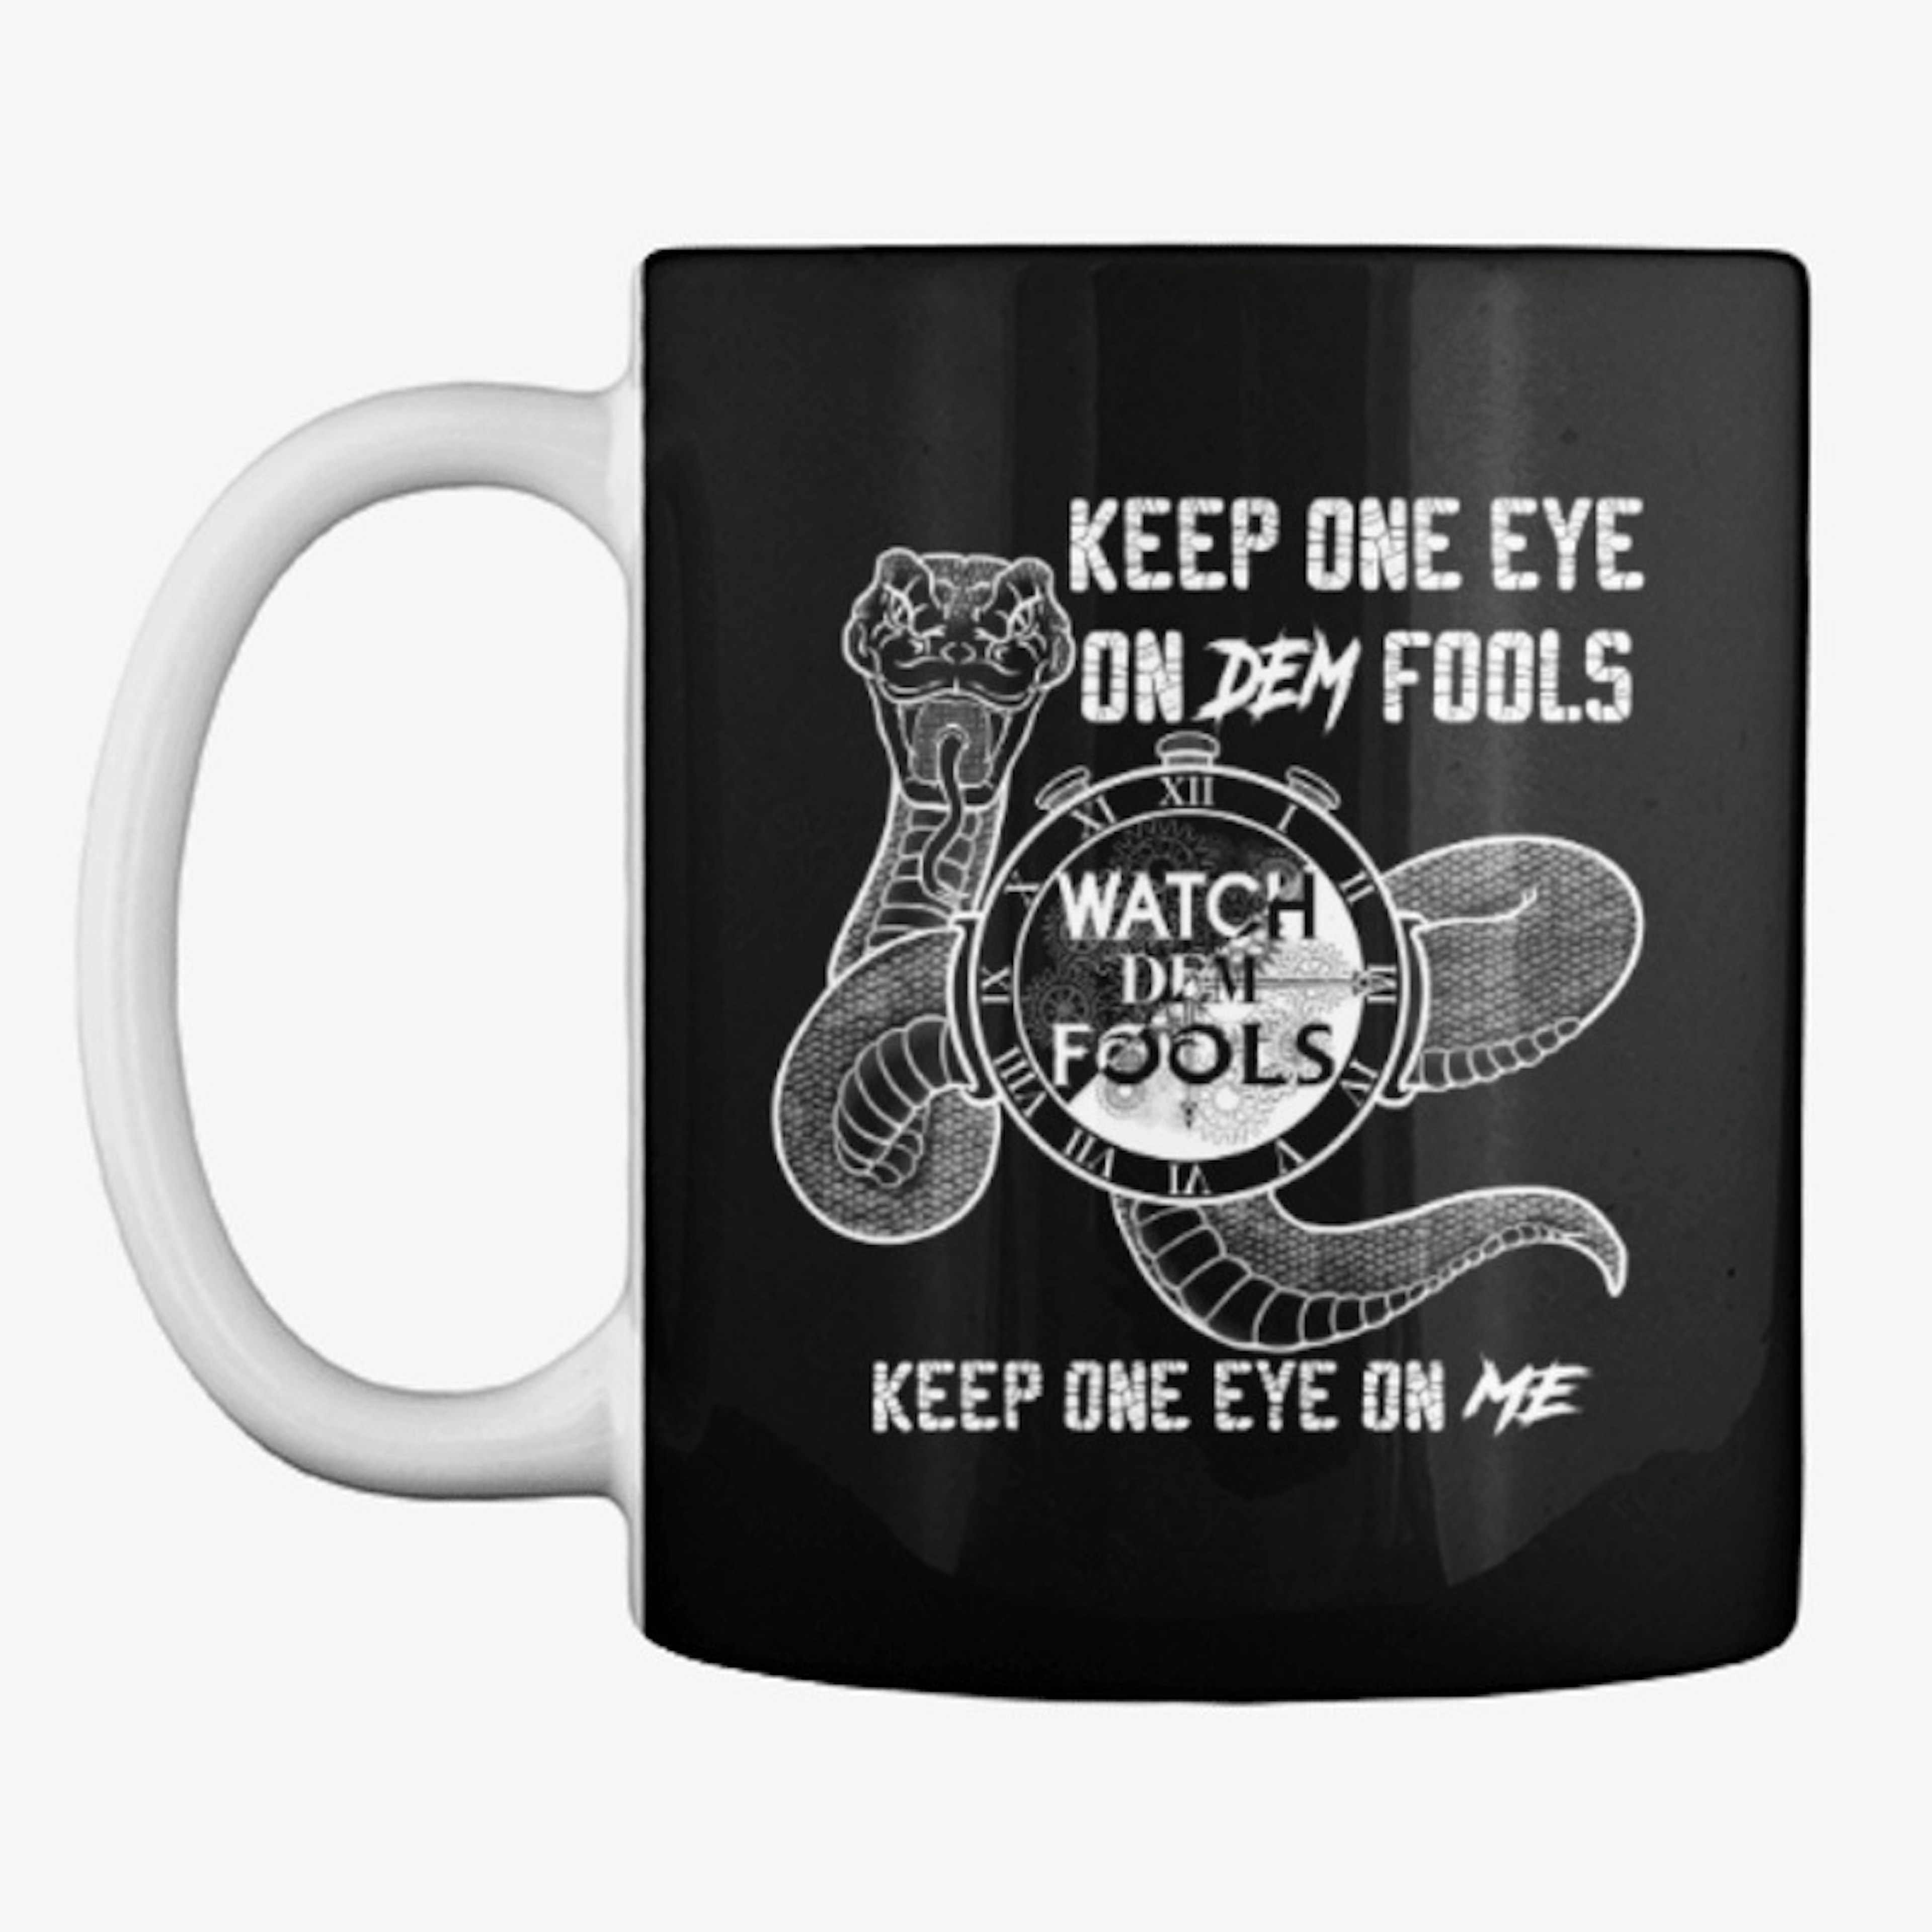 Keep One Eye on Dem Fools - Black Mug